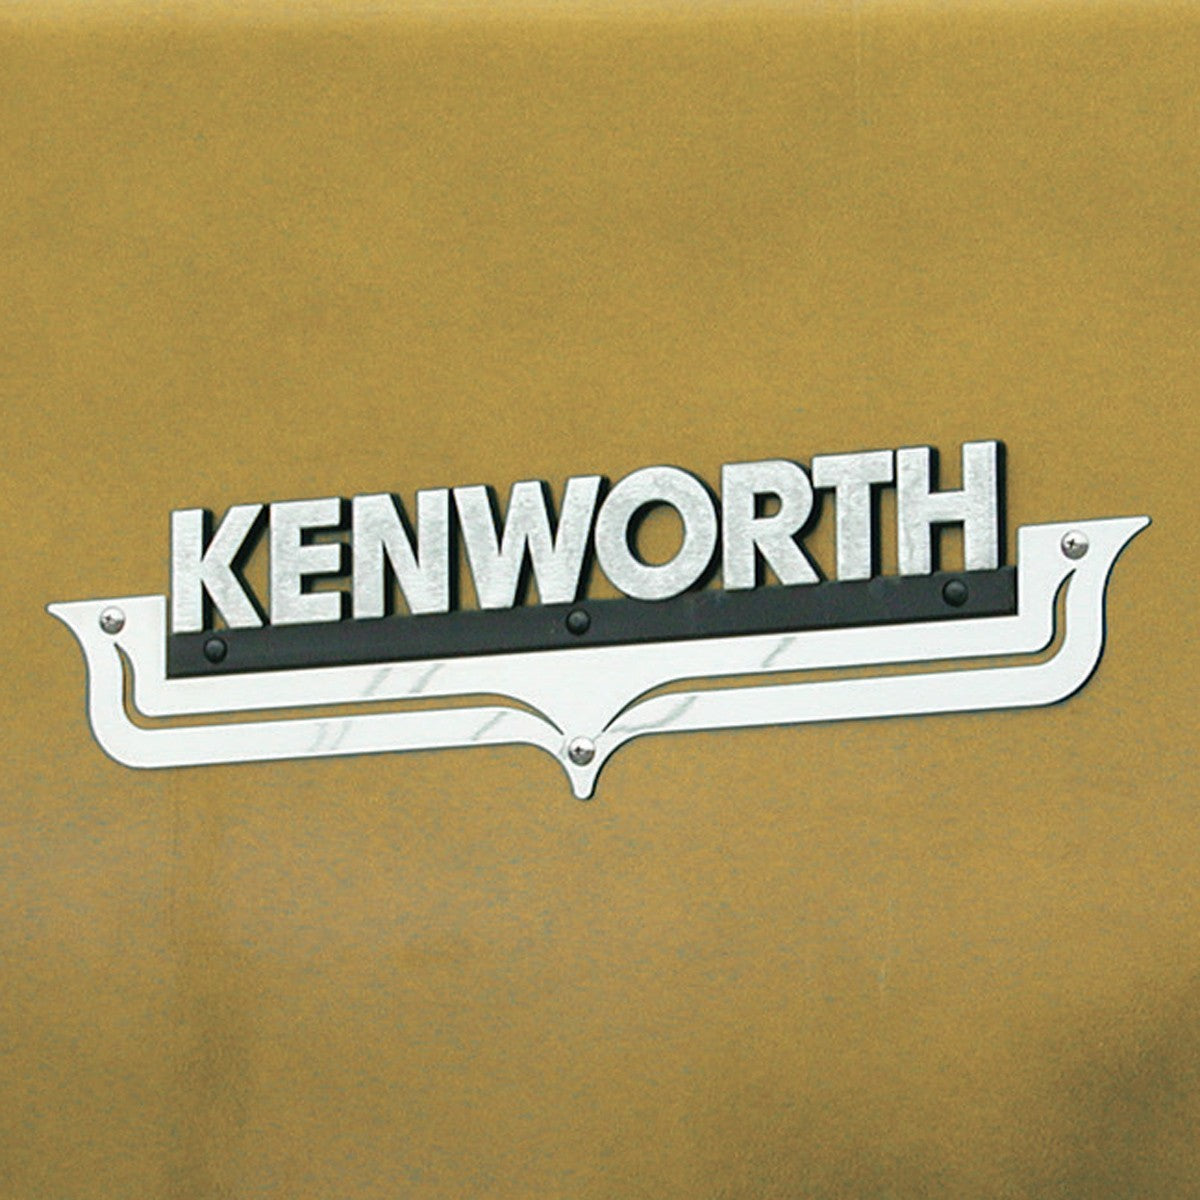 Kenworth Hood Emblem Accent - 2 Cutout Accent